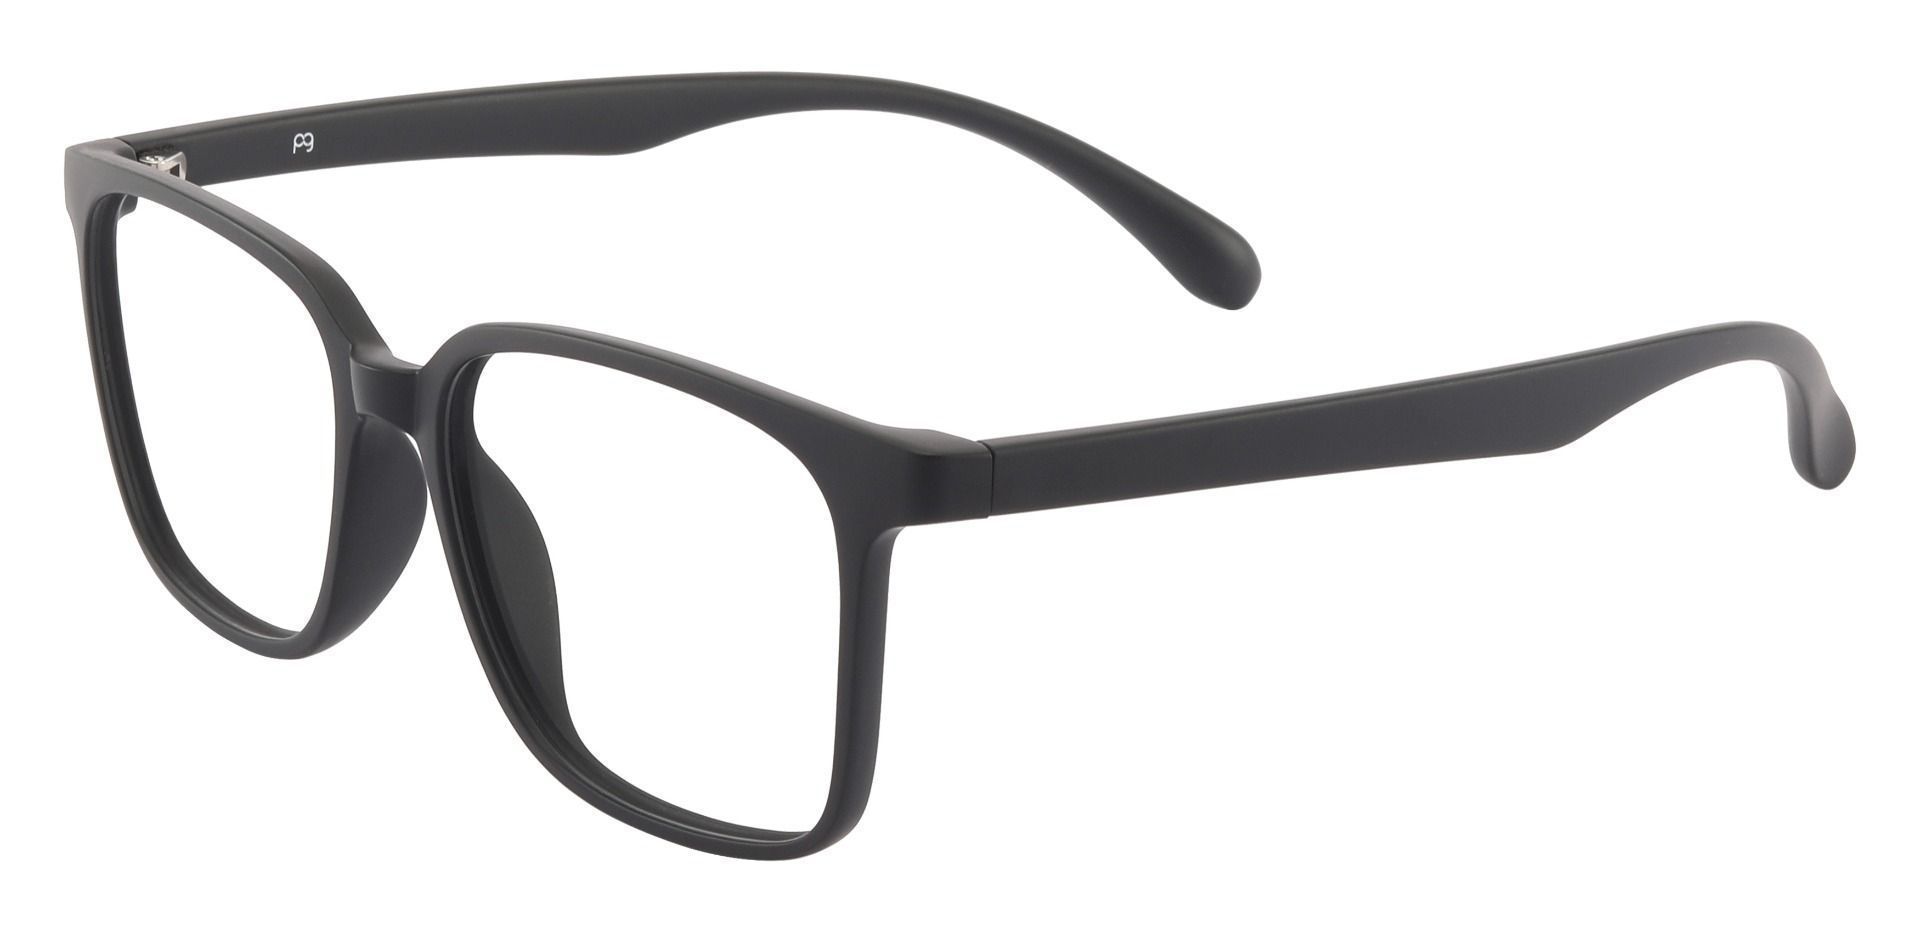 Kennett Square Prescription Glasses - Black